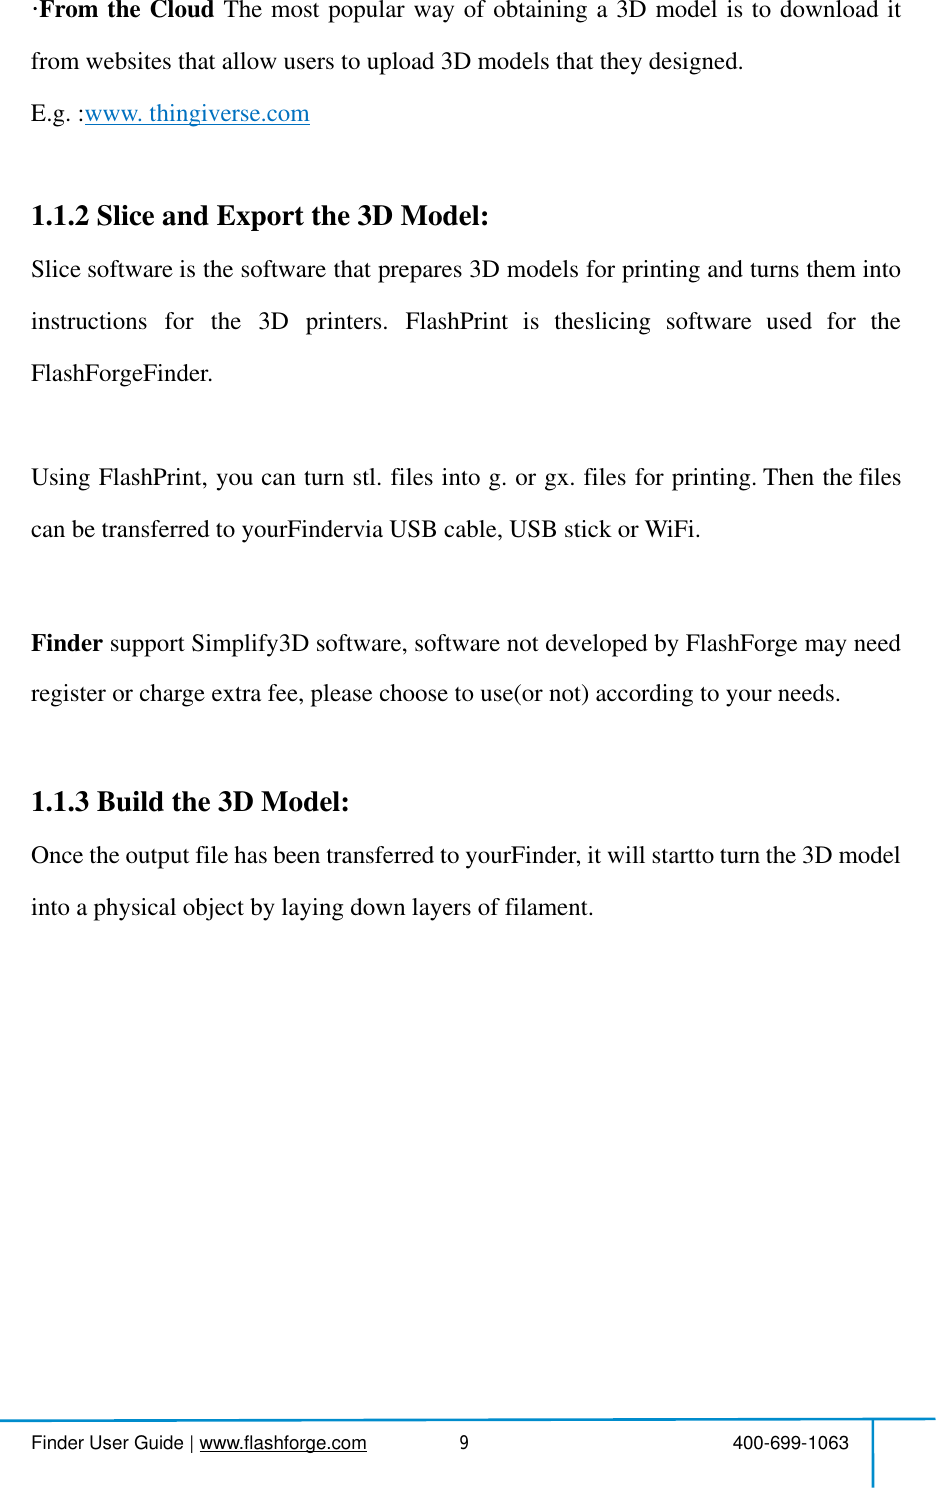  Finder User Guide|www.flashforge.com 400-699-10639FromtheCloud Themostpopularwayofobtaininga3Dmodelistodownloaditfromwebsitesthat allow usersto upload 3Dmodelsthattheydesigned.E.g. :www.thingiverse.com1.1.2SliceandExportthe3DModel:Slice softwareisthesoftwarethatprepares3Dmodelsforprintingandturnsthemintoinstructionsforthe3Dprinters.FlashPrintistheslicingsoftwareusedfortheFlashForgeFinder.UsingFlashPrint,youcanturnstl.filesintog.orgx.filesforprinting.Thenthefilescan be transferredto yourFinderviaUSB cable,USB stick orWiFi.Finder supportSimplify3Dsoftware,softwarenotdevelopedbyFlashForgemayneedregisterorcharge extrafee, please chooseto use(or not)accordingto your needs.1.1.3Buildthe3DModel:OncetheoutputfilehasbeentransferredtoyourFinder,itwillstarttoturnthe3Dmodelinto a physical object bylaying downlayers offilament.